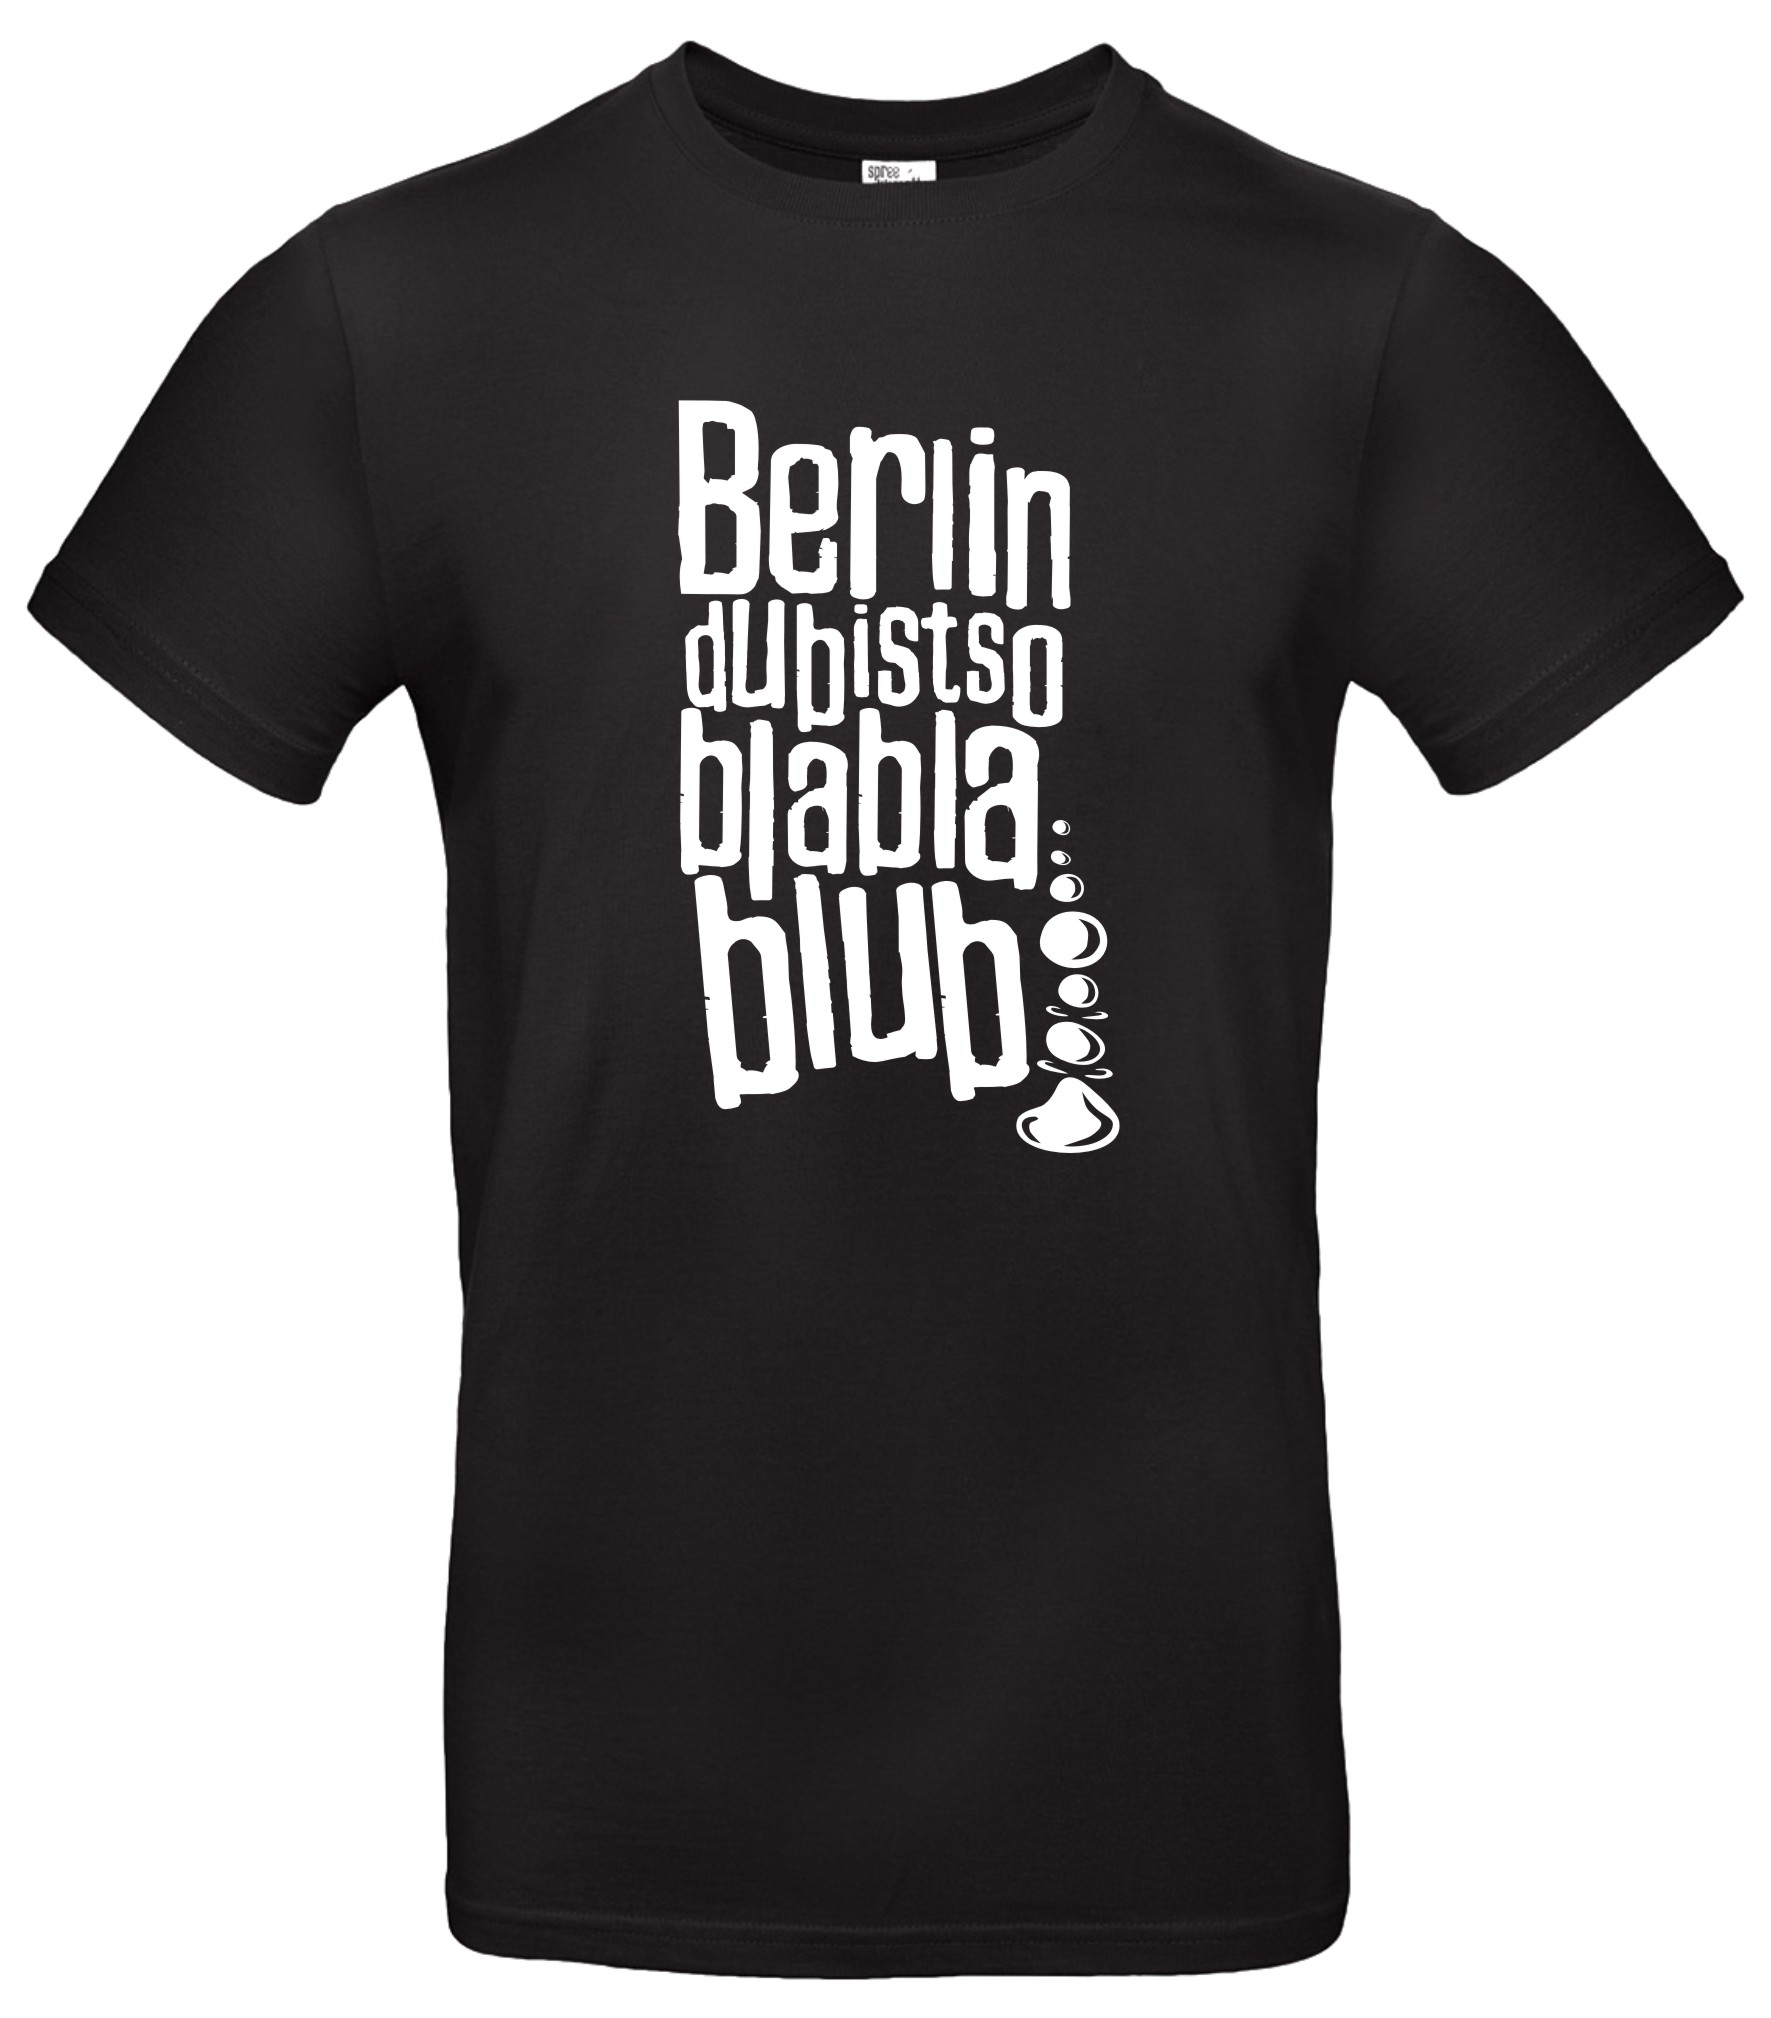  Spree Shirt Männer schwarz Berlin bla bla